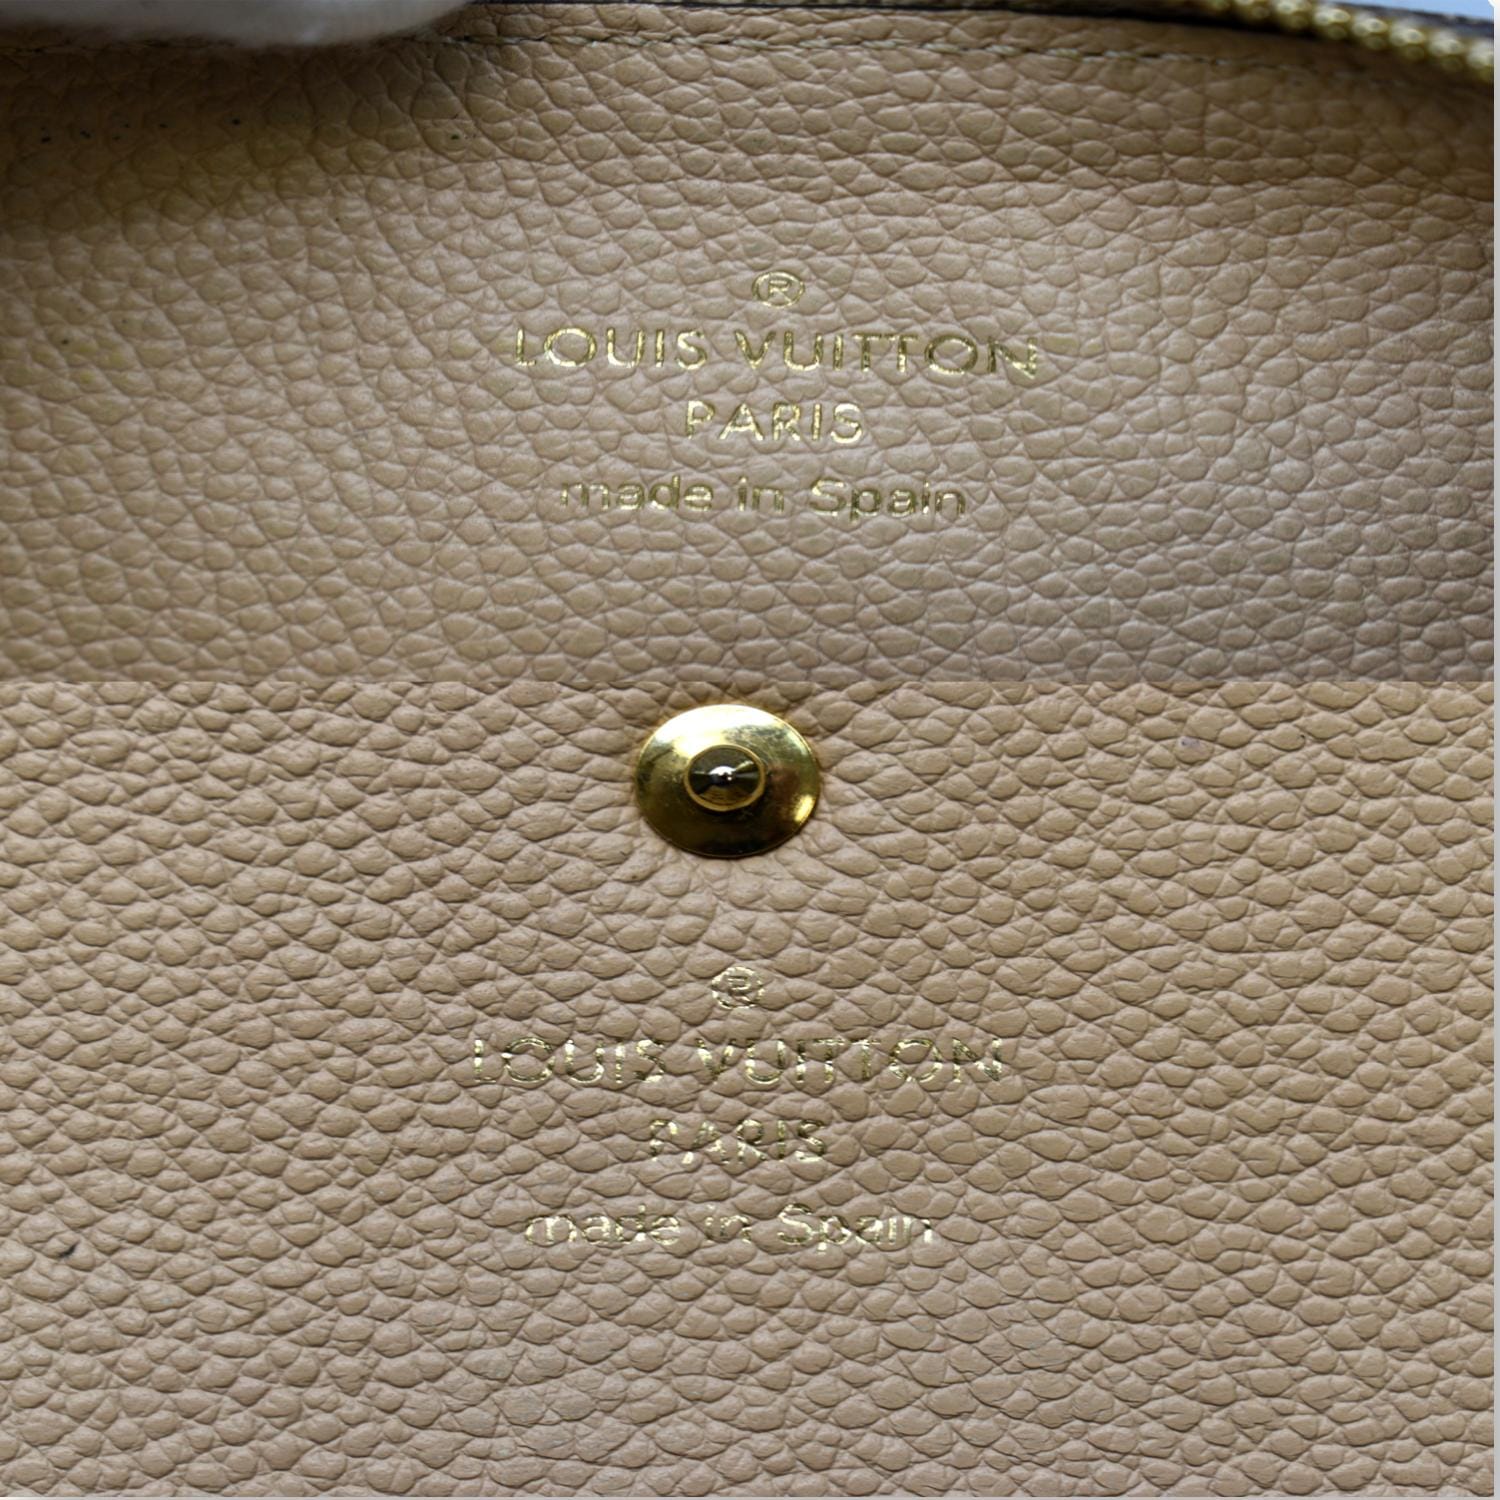 Louis Vuitton Burgundy LV Monogram Empreinte Leather Curieuse Wallet